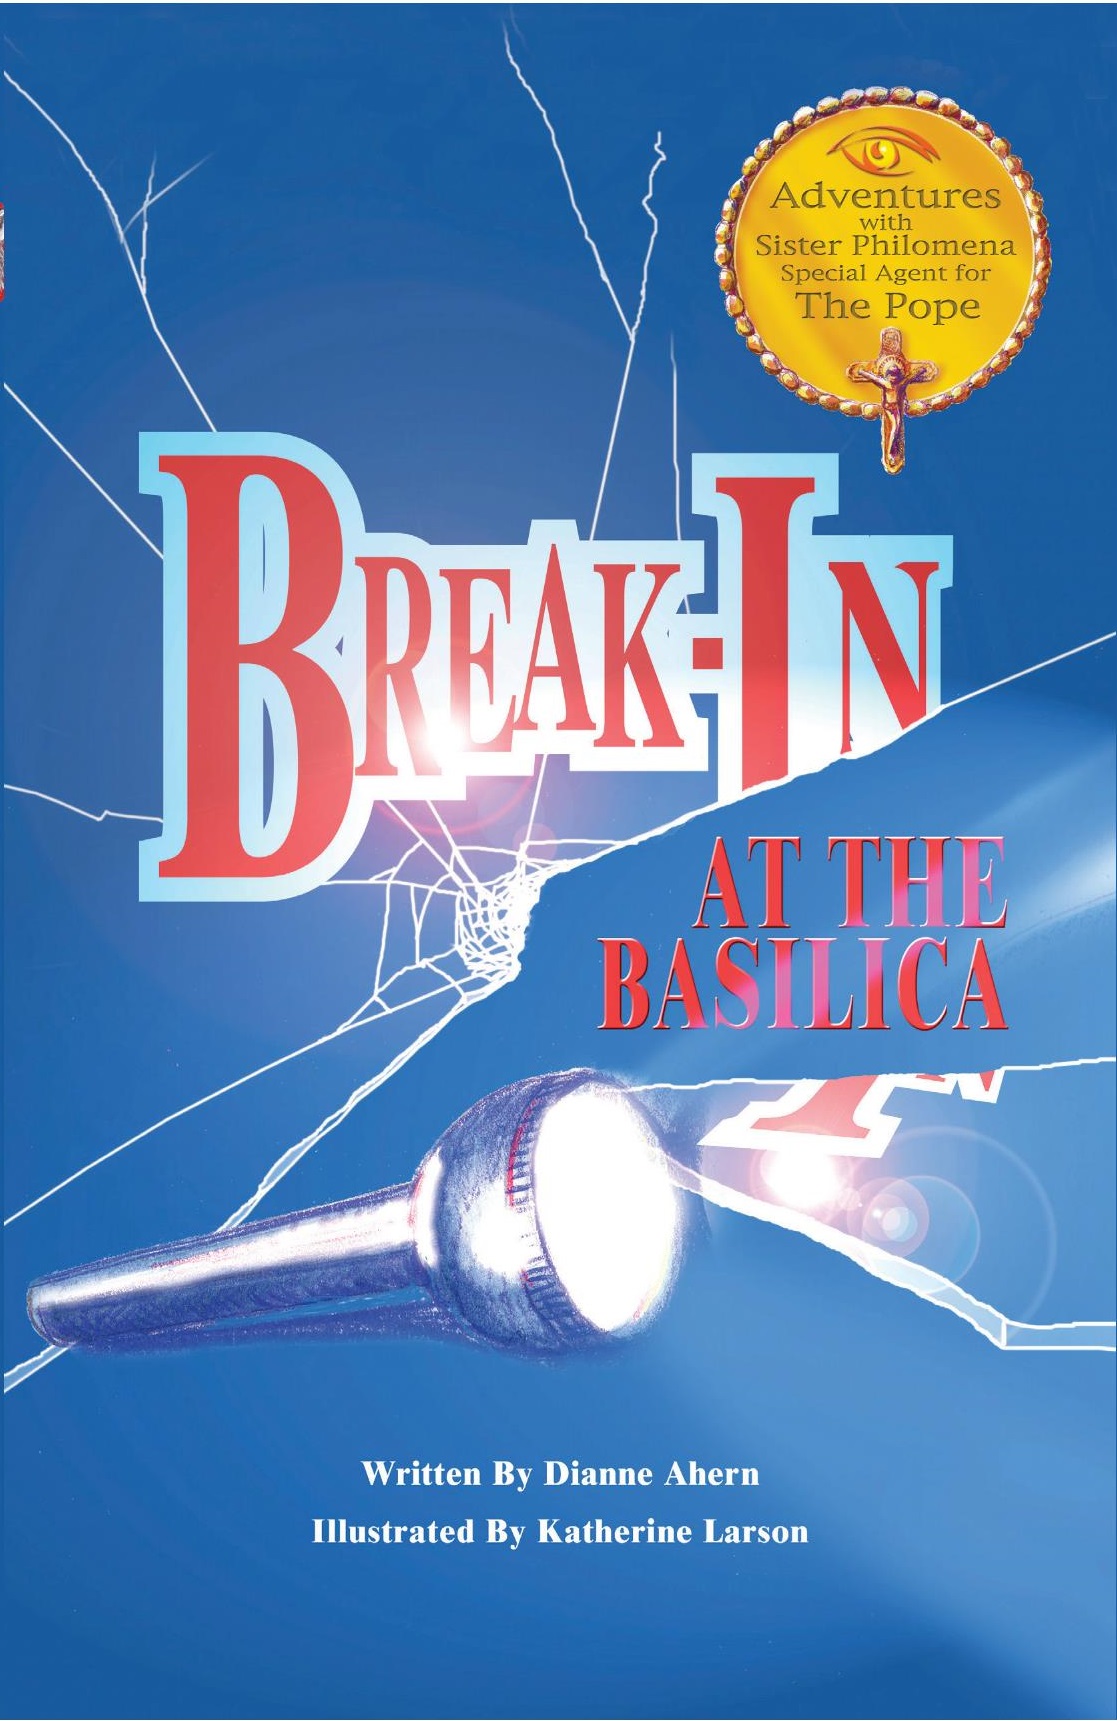 Break-In at the Basilica